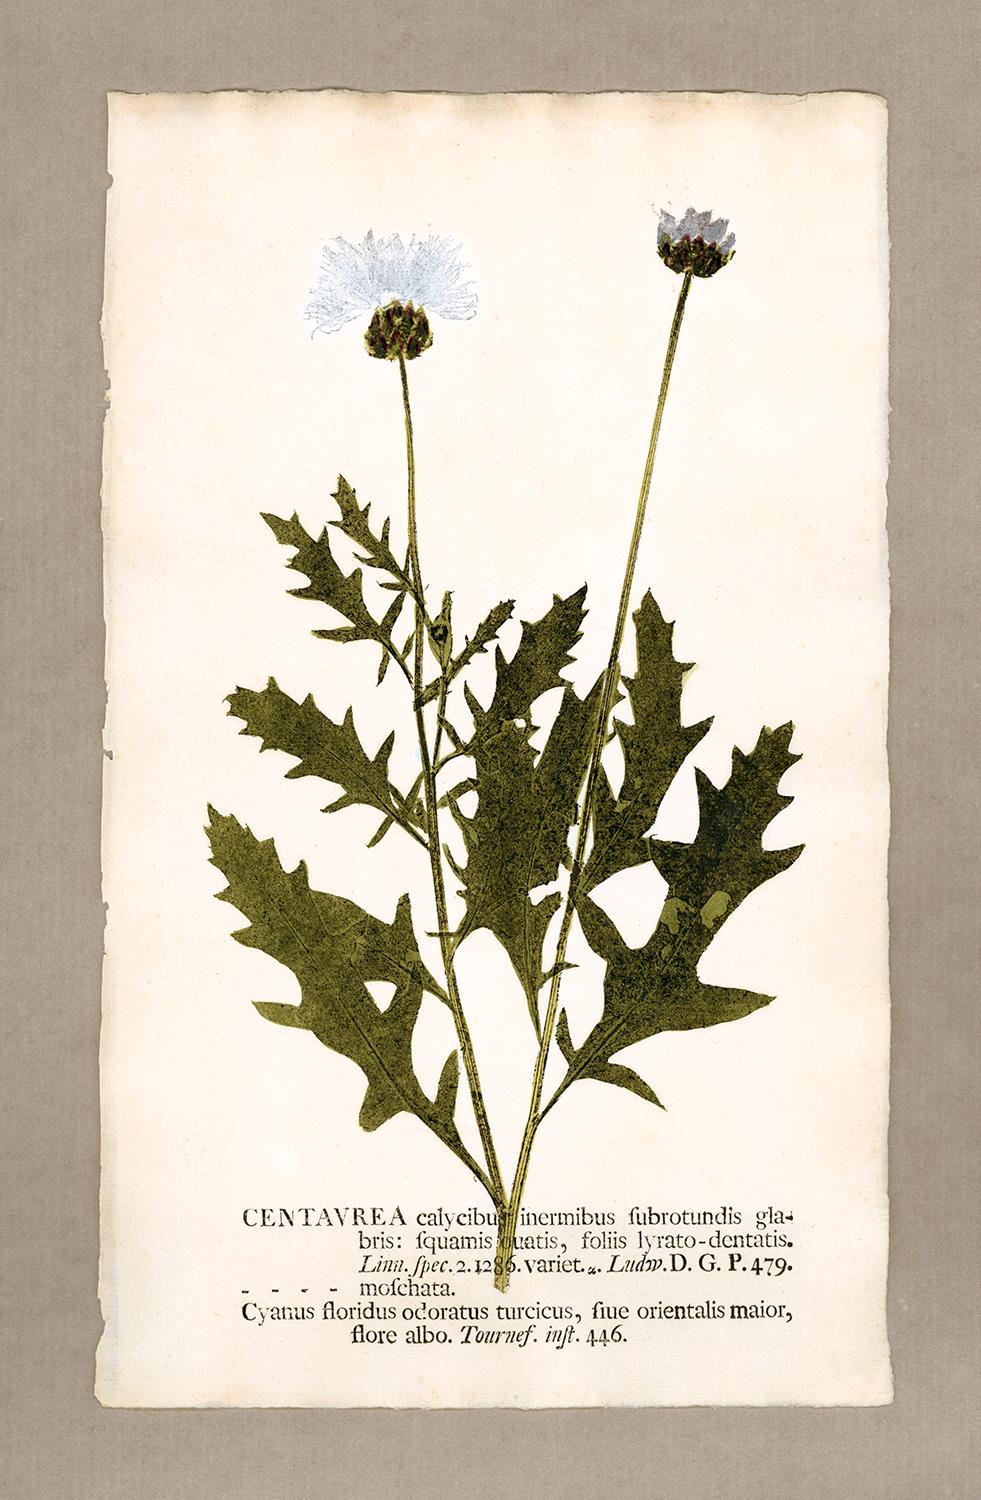 Johann Hieronymus Kniphof  Black and White Photograph - Botanica in Originali, seu Herbarium Vivum - "Nature Printed Plants" -2